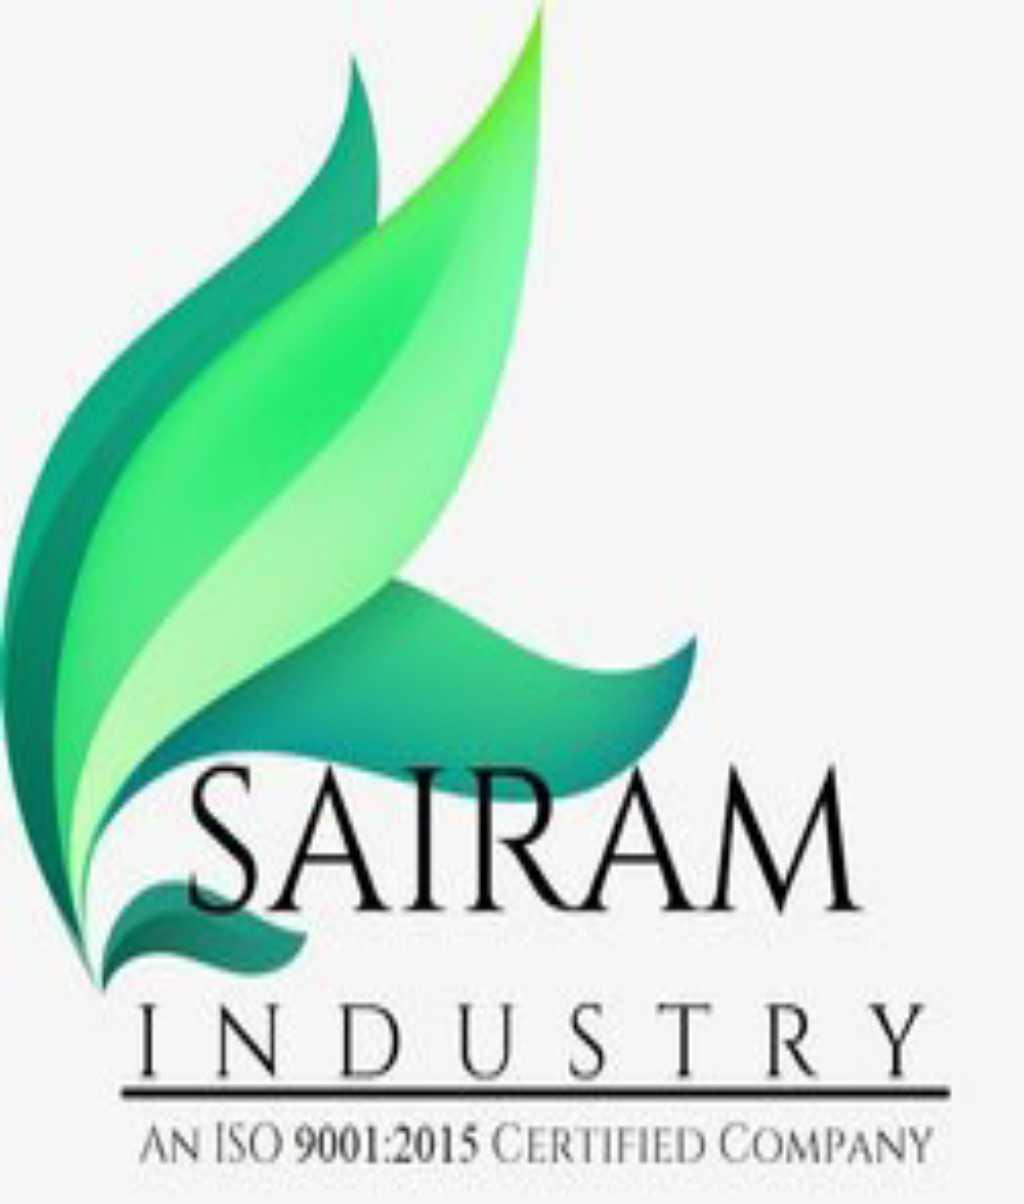 Sairam Industry